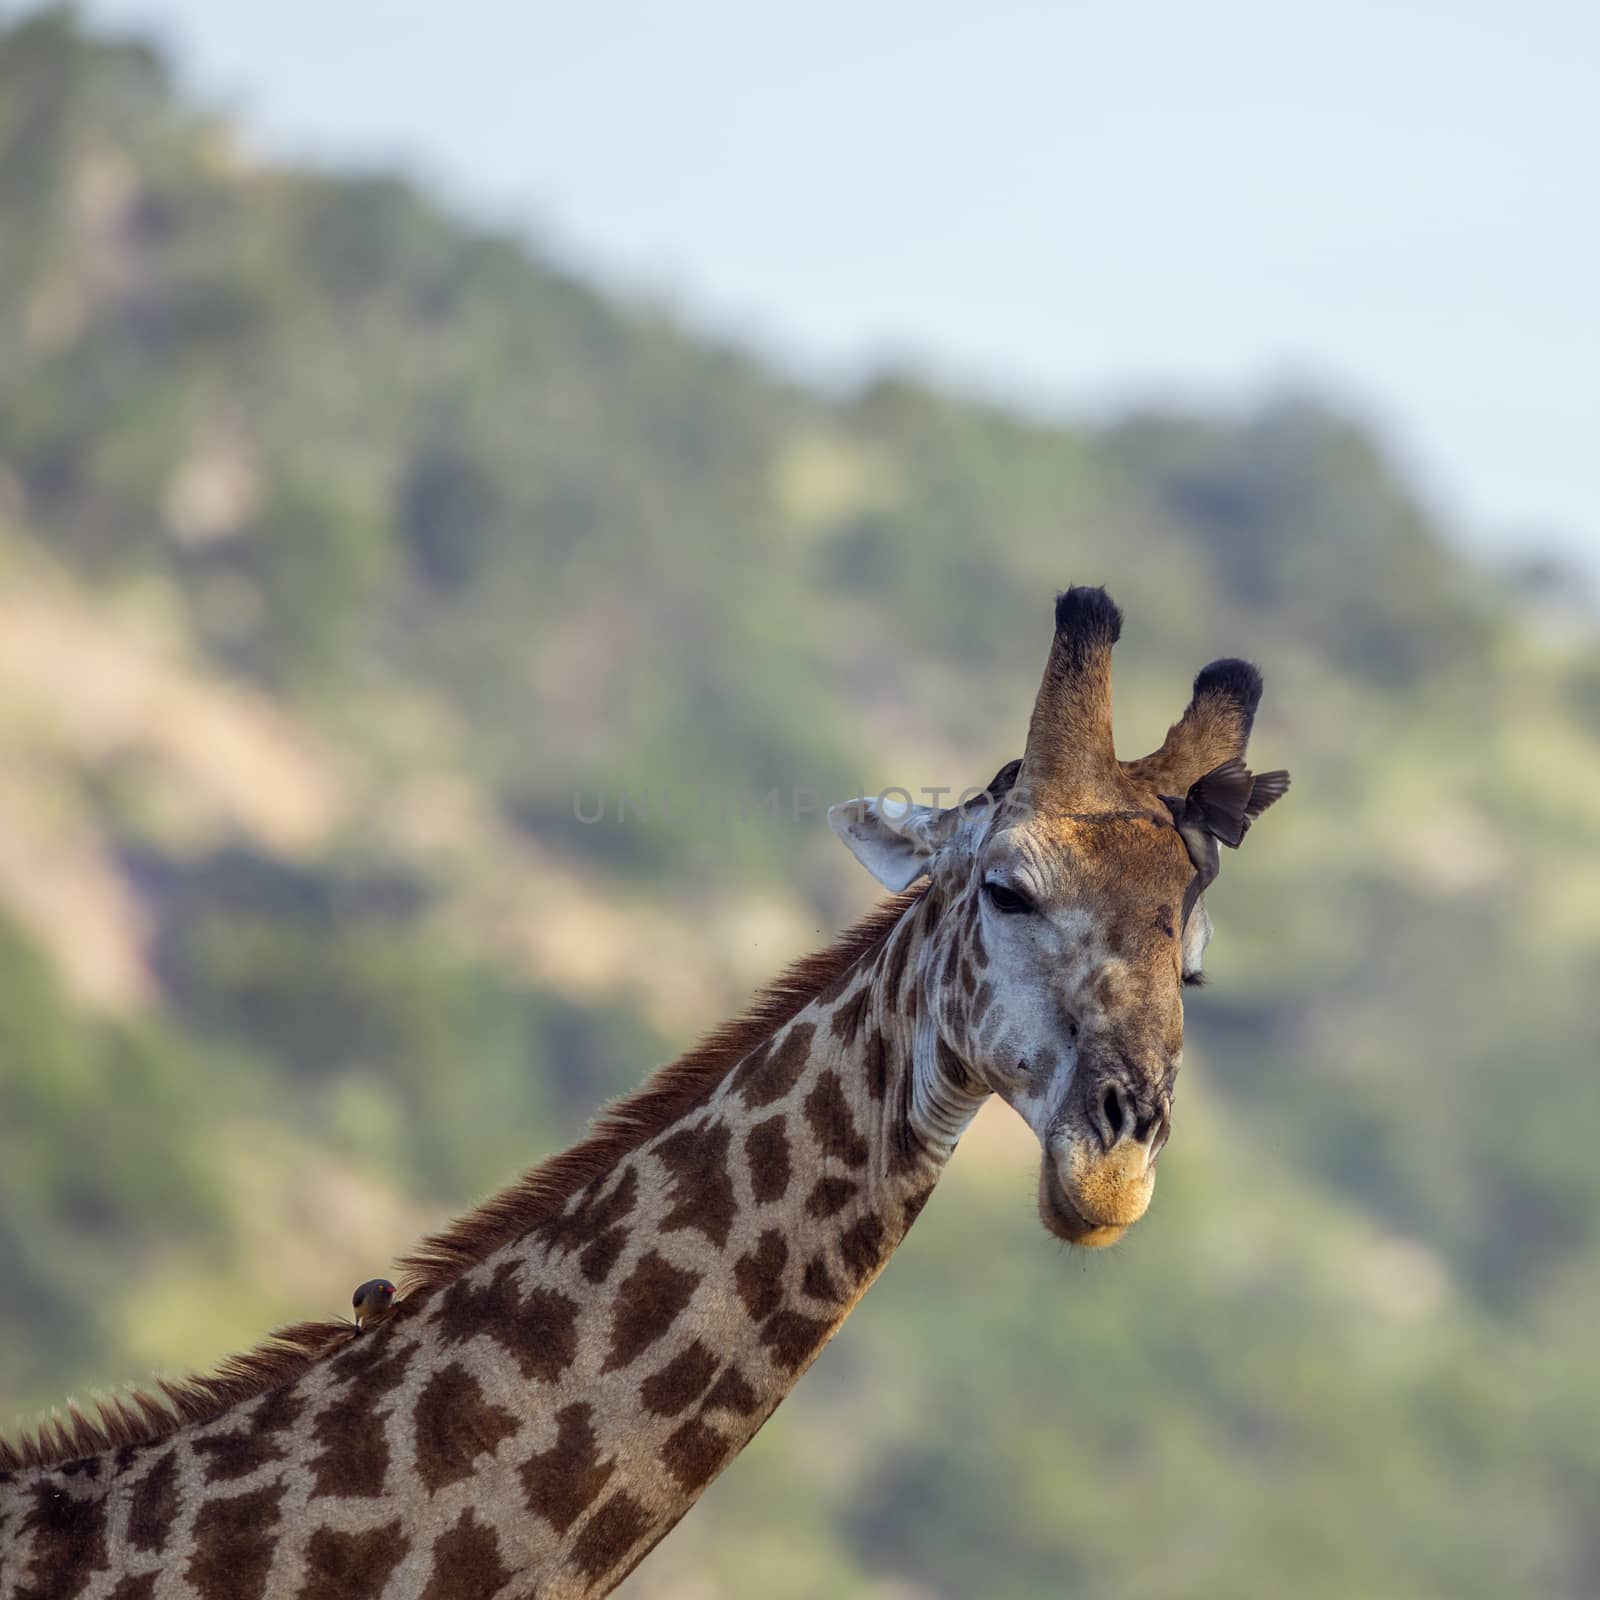 Giraffe portrait with oxpecker in Kruger National park, South Africa ; Specie Giraffa camelopardalis family of Giraffidae